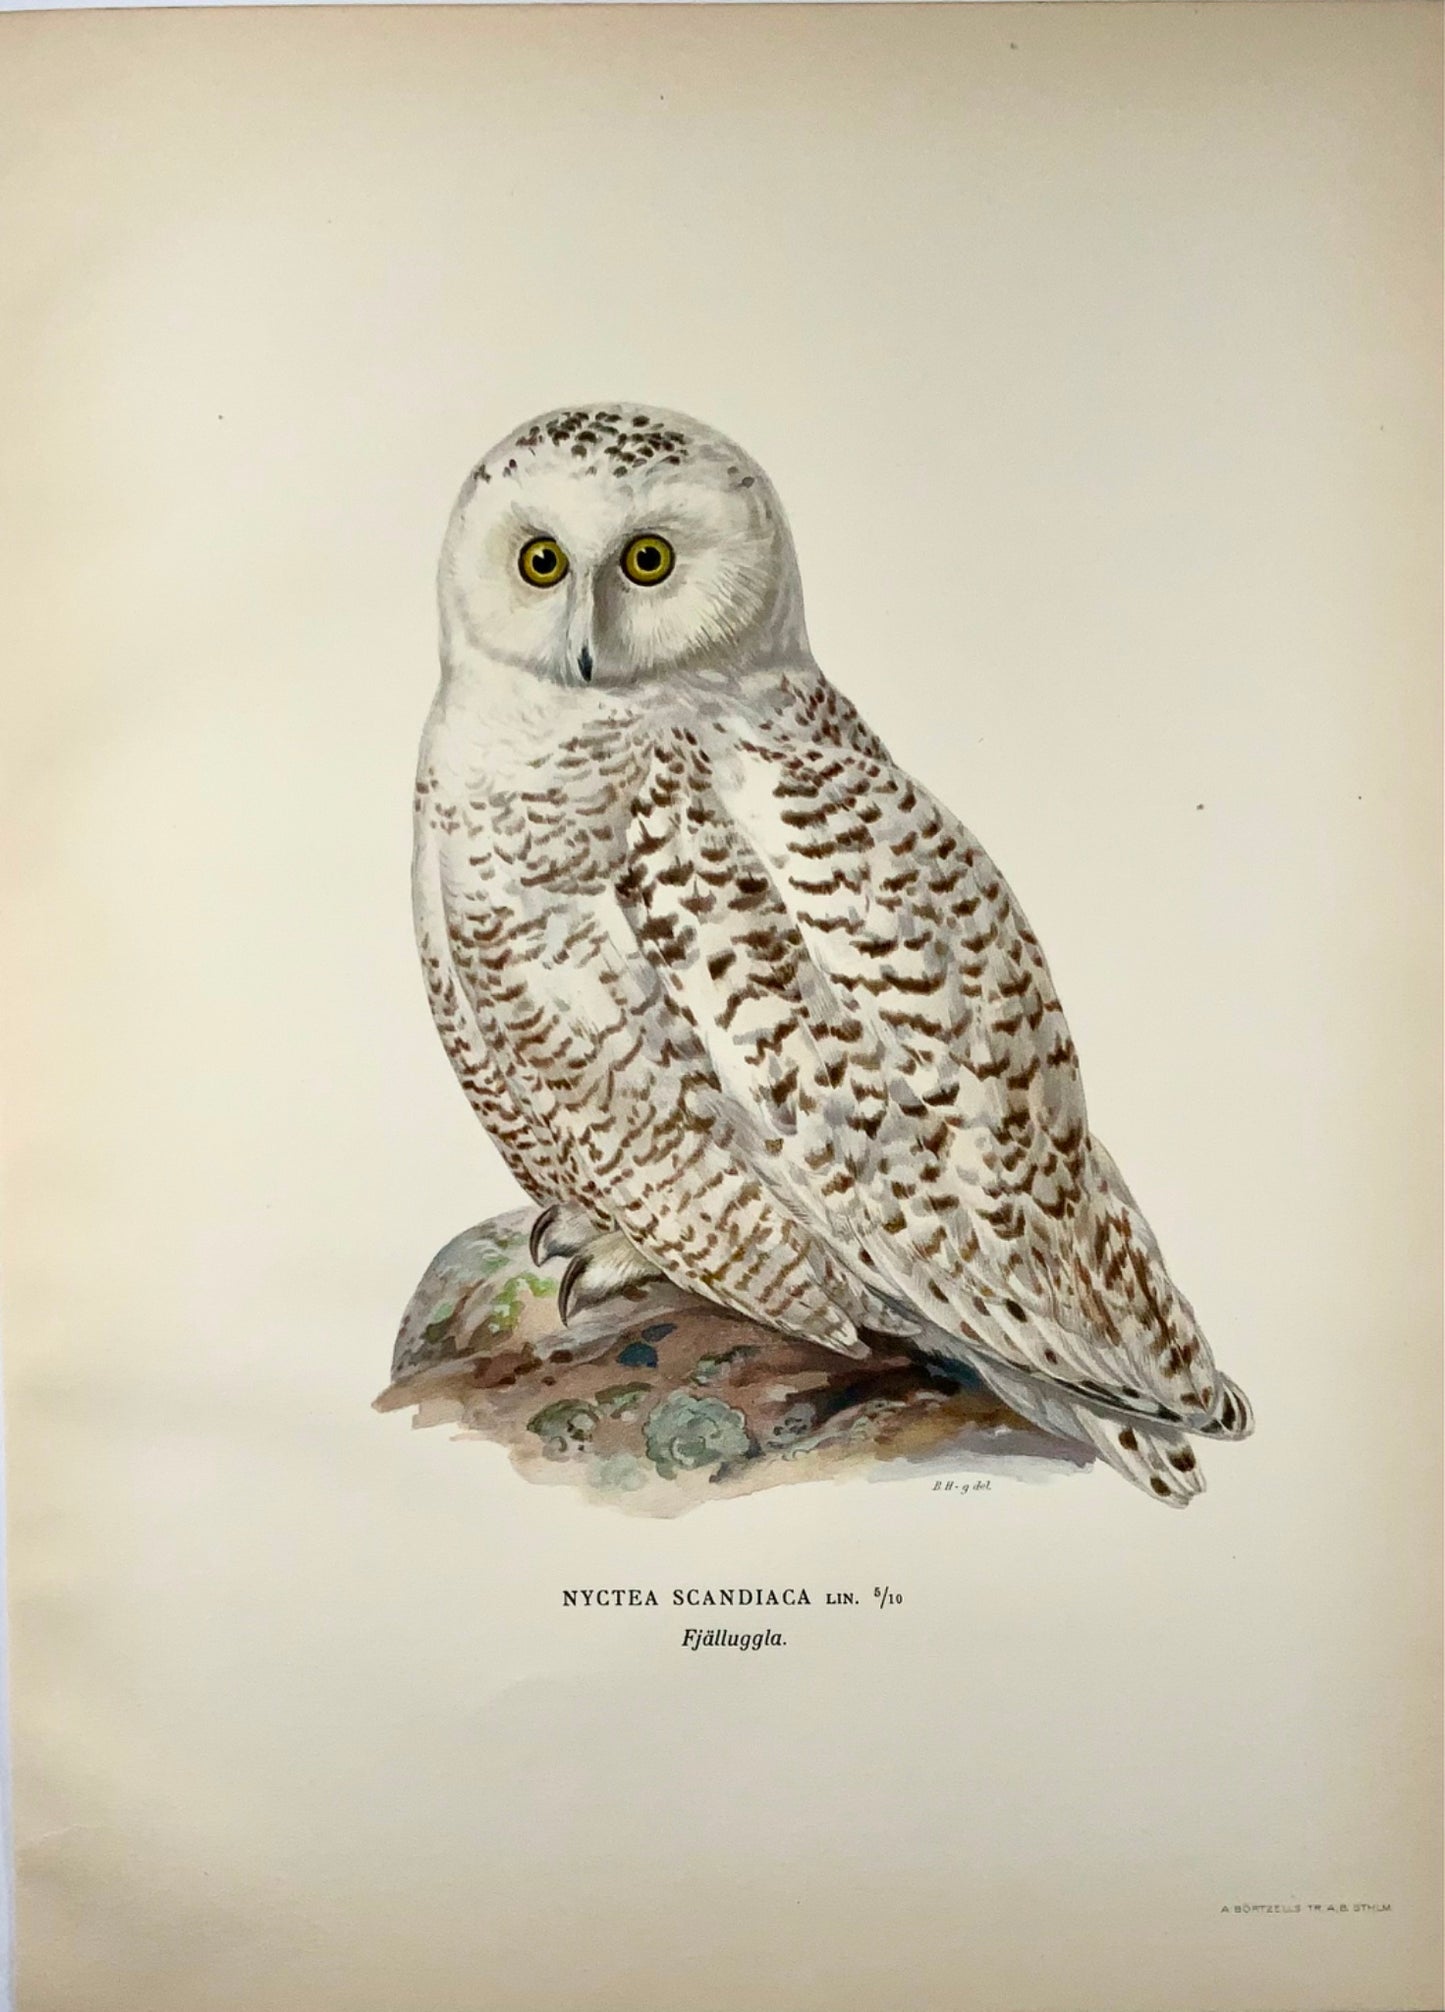 1918 Von Wright, Snowy Owl, large folio lithograph, ornithology